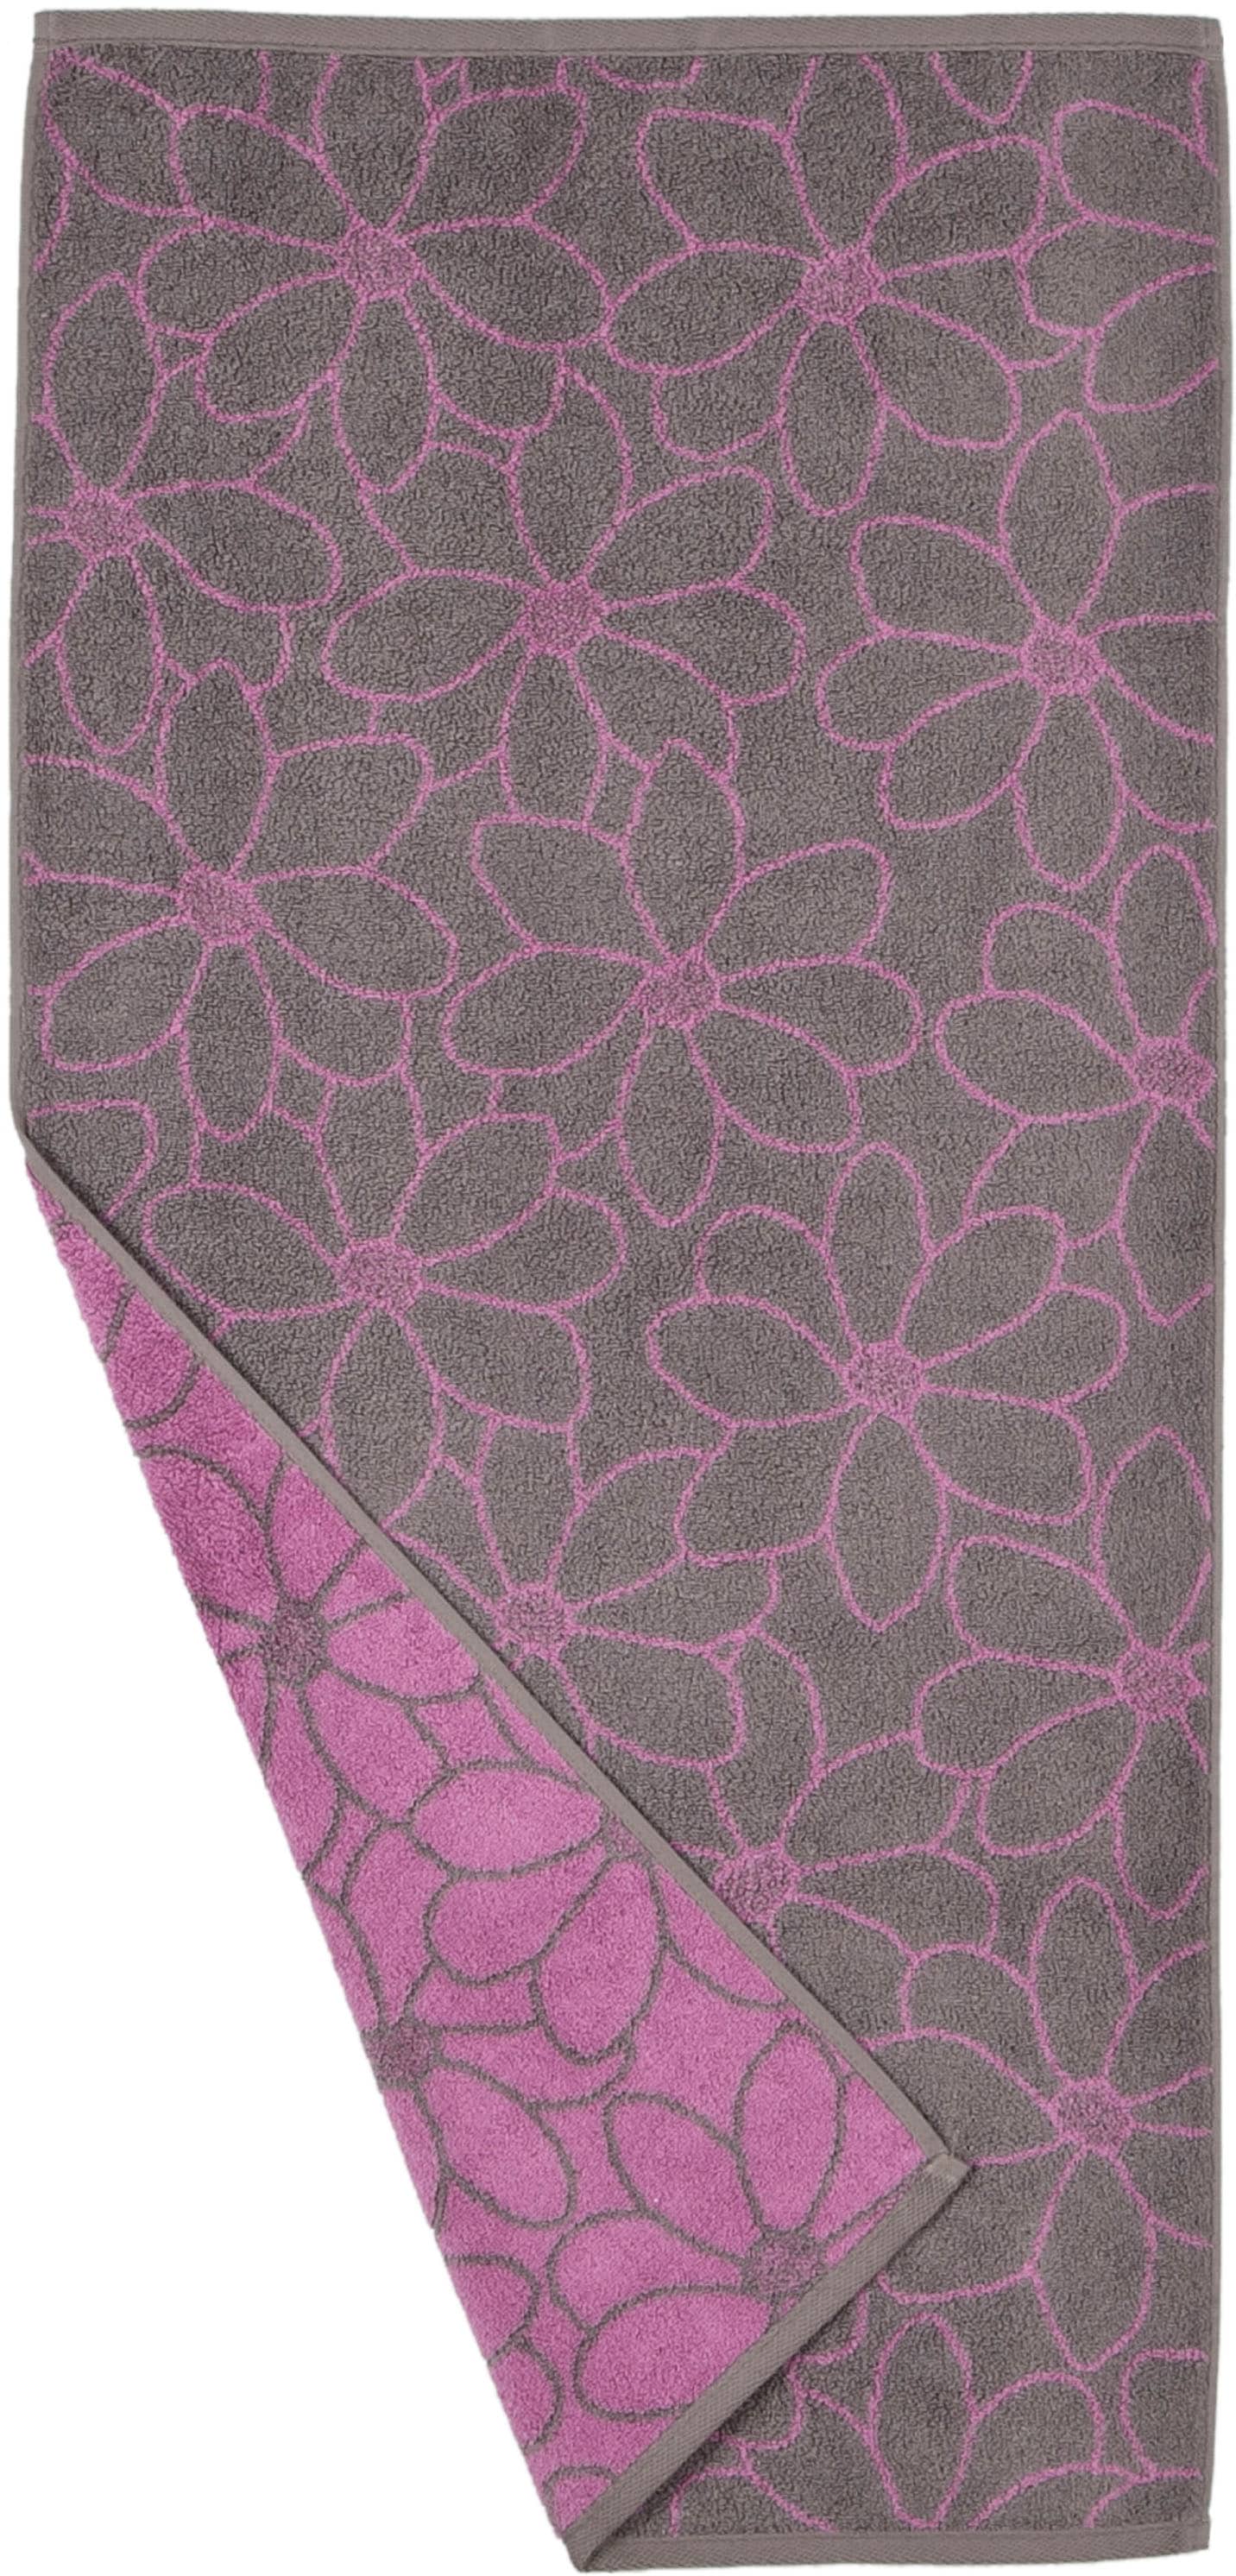 ROSS Handtücher »Blütenfond«, bestellen (2 feinster und schnell bequem St.), aus Mako-Baumwolle